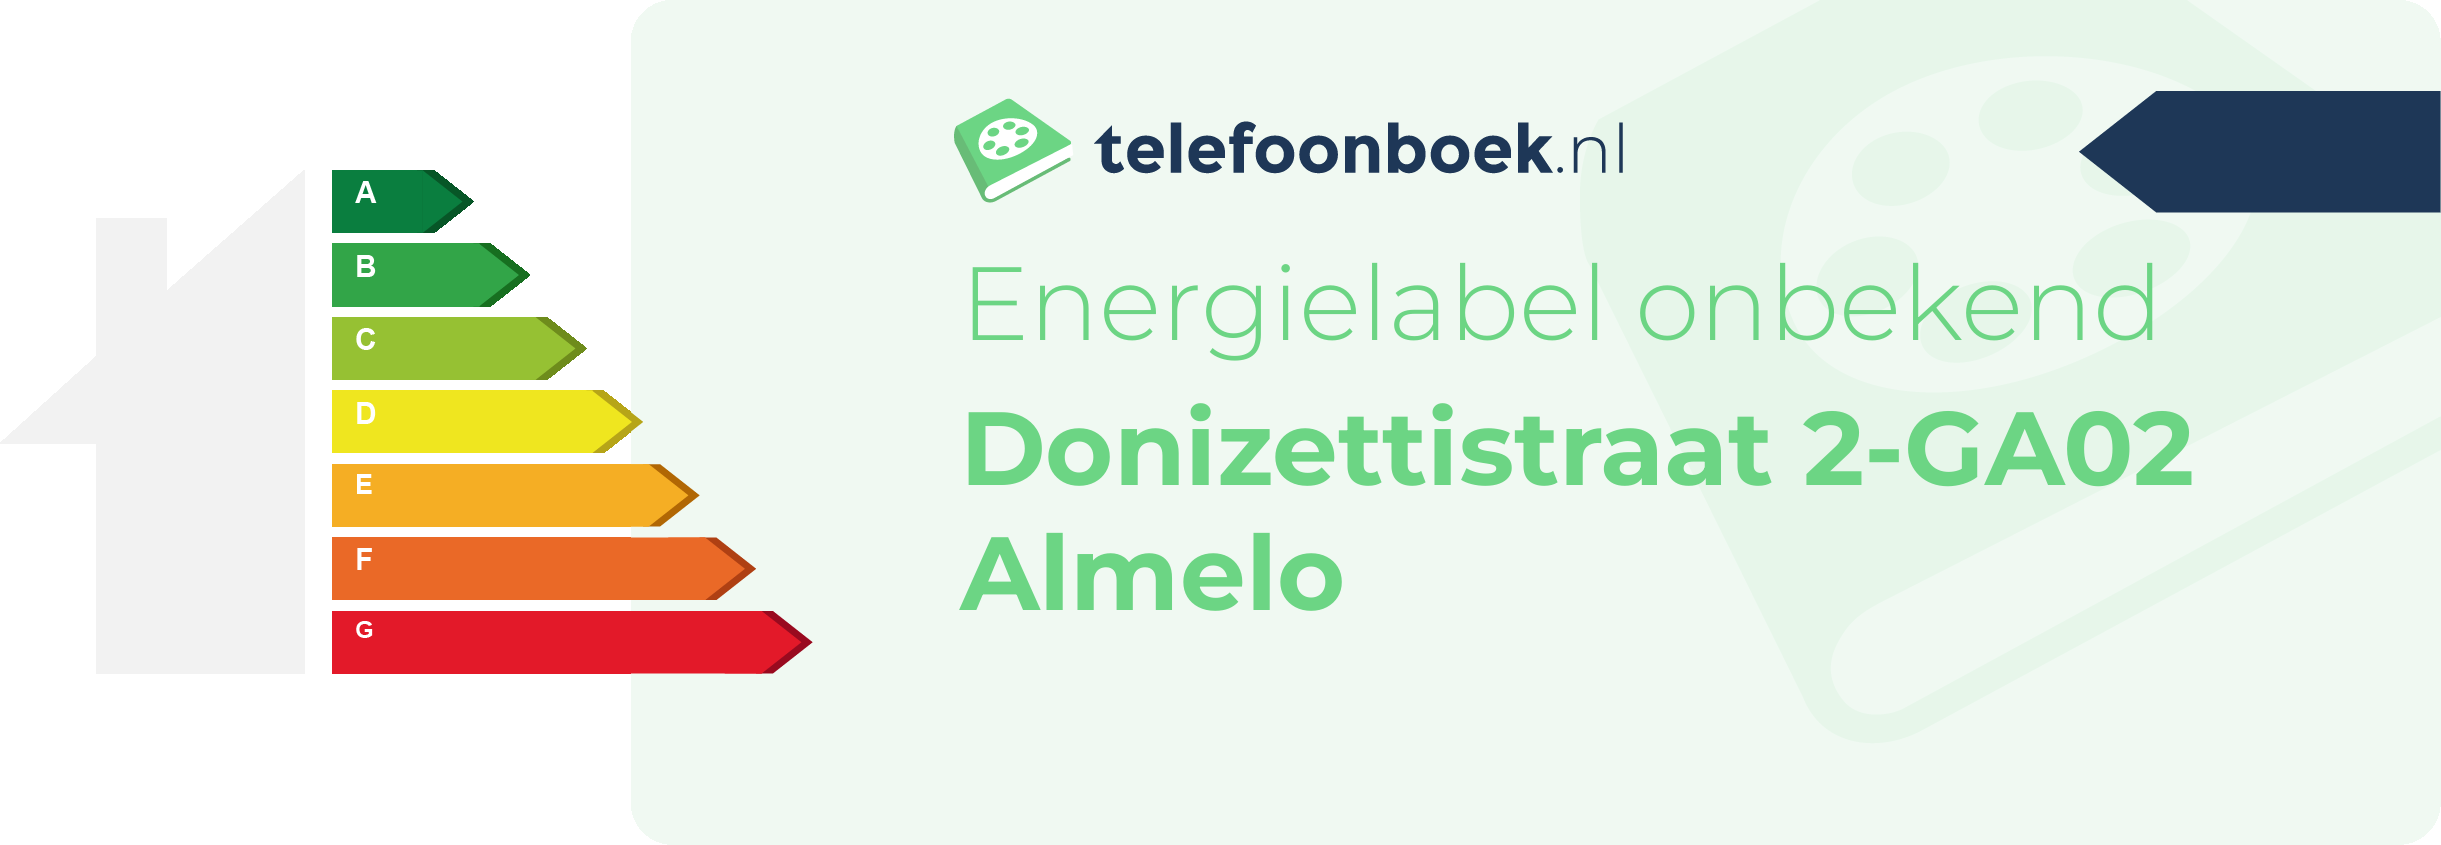 Energielabel Donizettistraat 2-GA02 Almelo